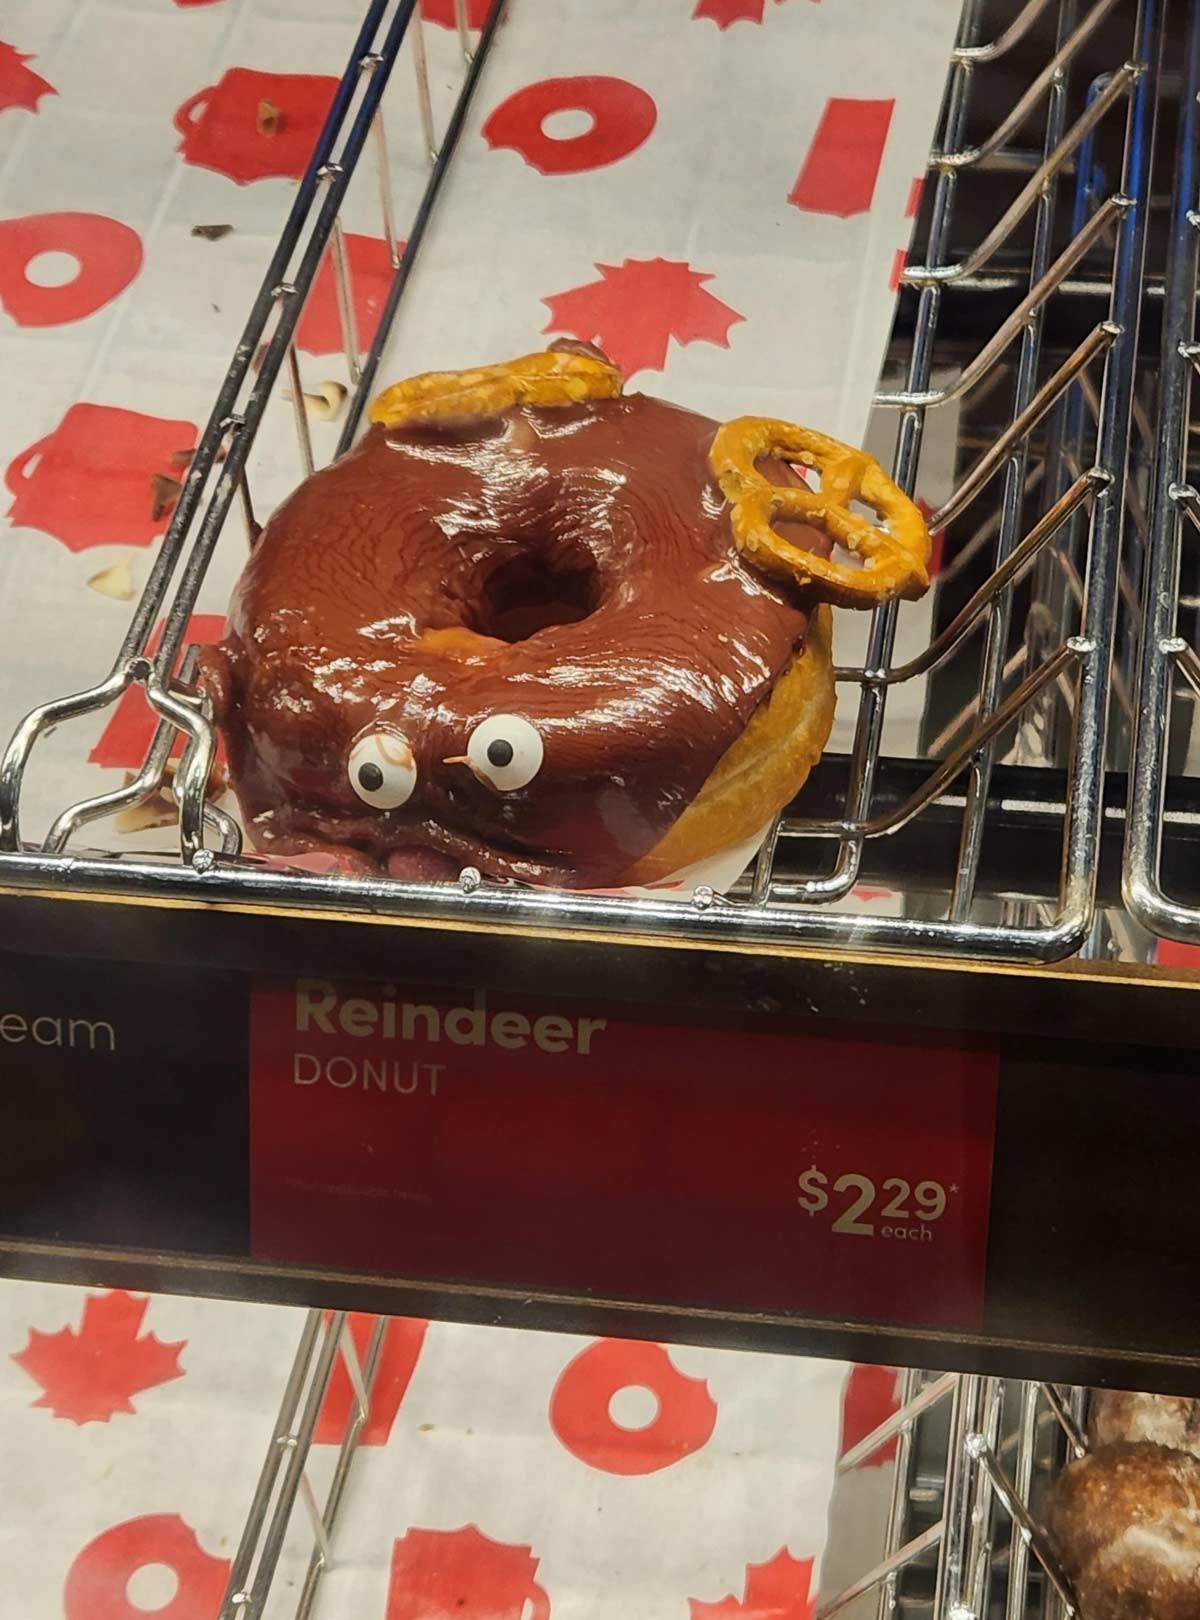 The Official Tim Horton's Reindeer Donut